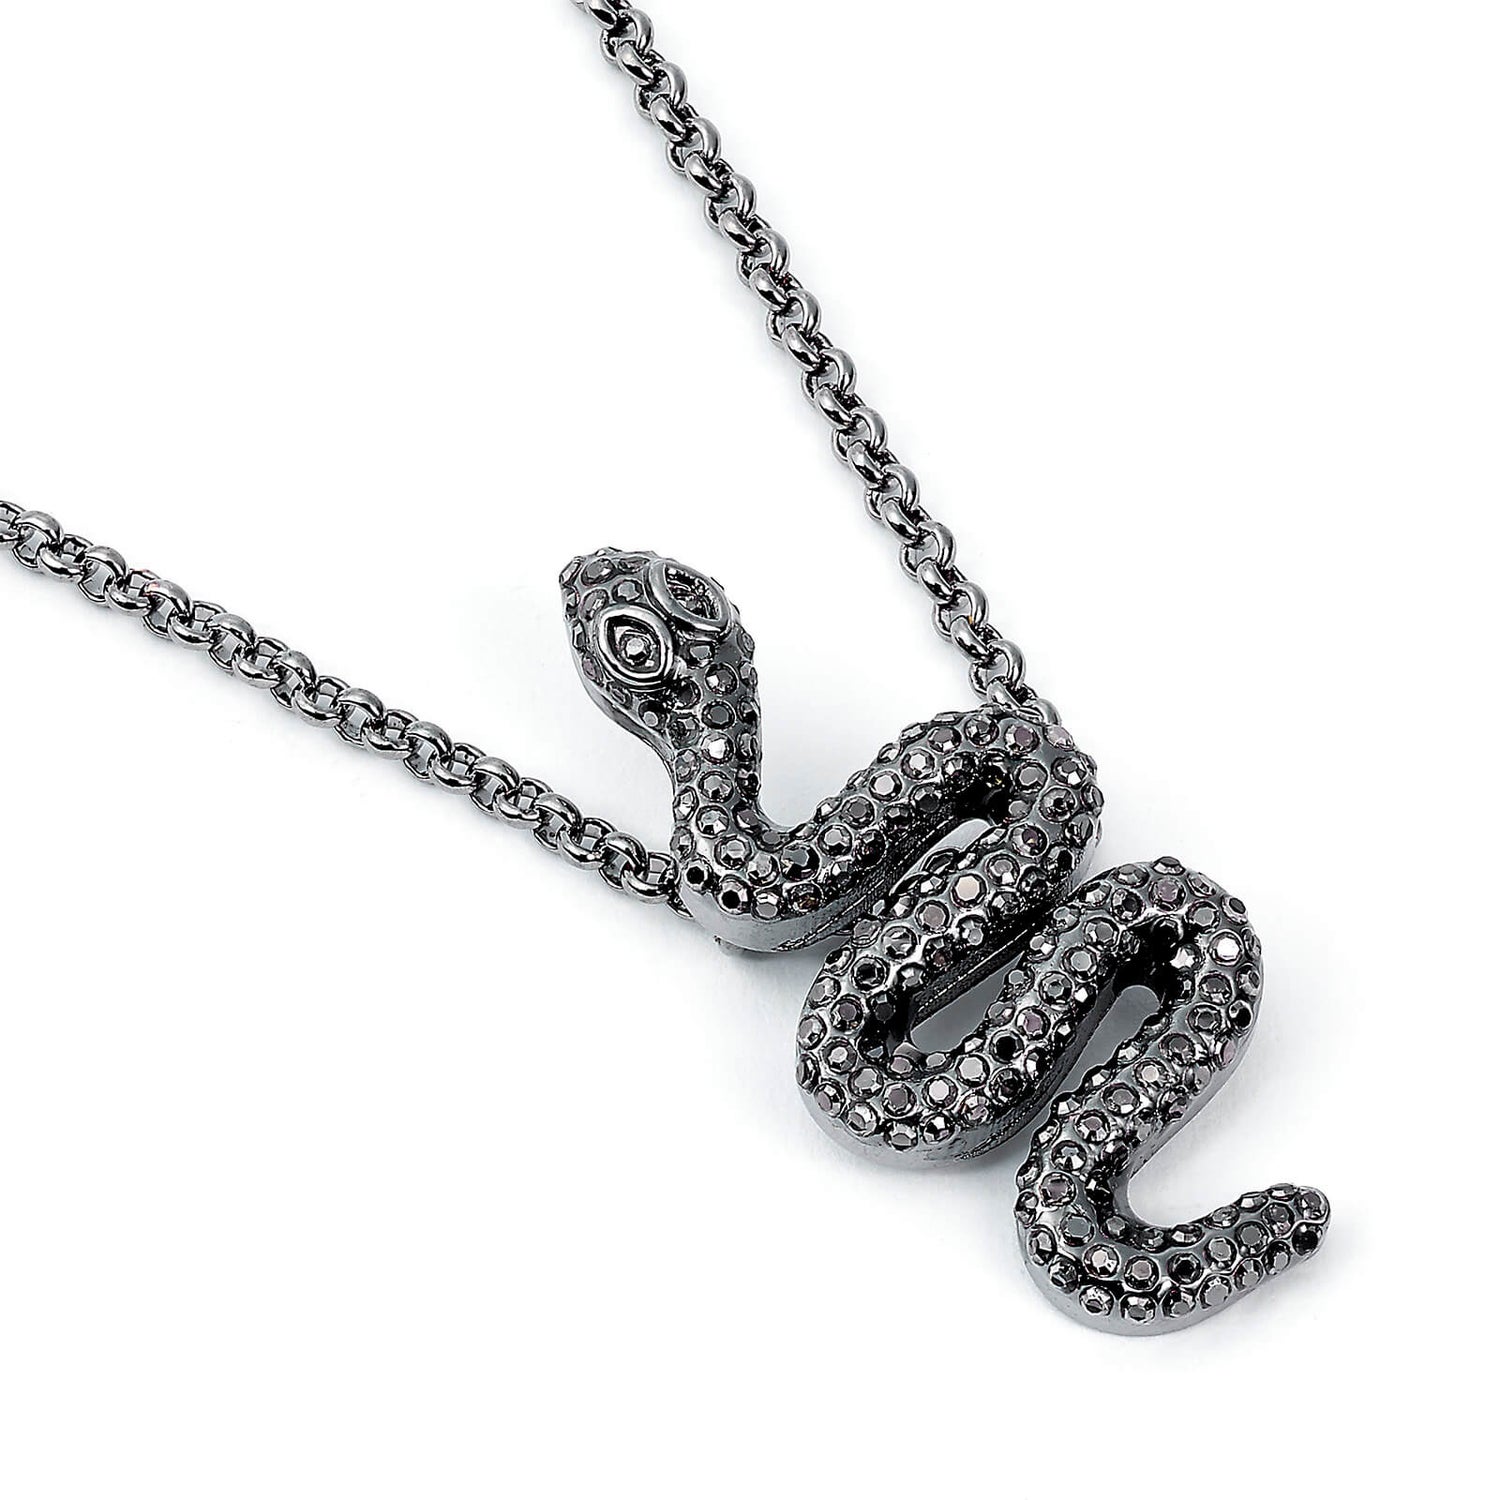 Harry Potter Nagini Black Crystal Pendant Necklace on a Black Suede Choker - Black